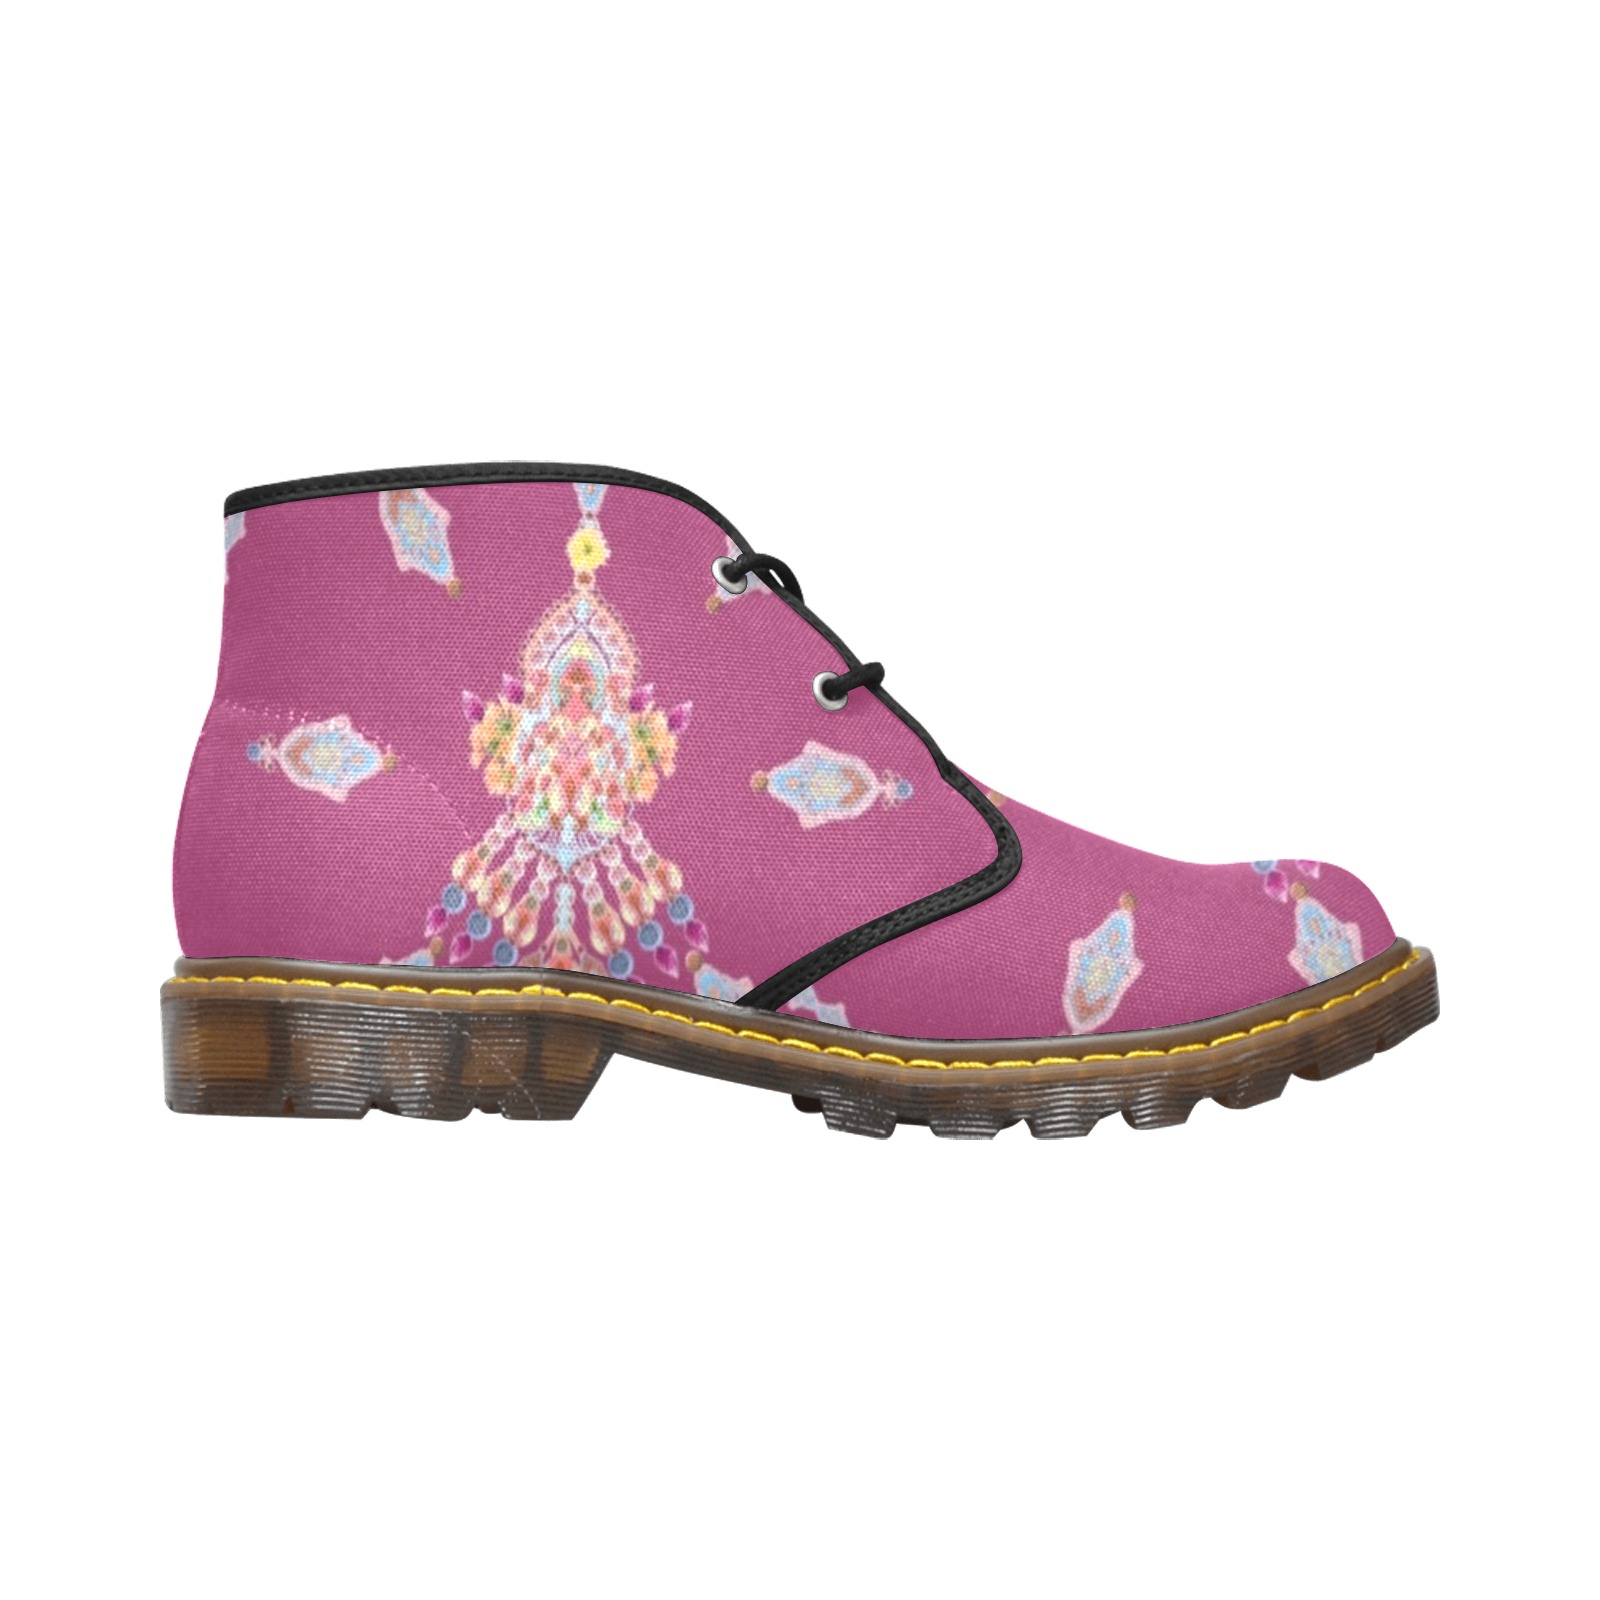 BLEUETS 7 Women's Canvas Chukka Boots (Model 2402-1)